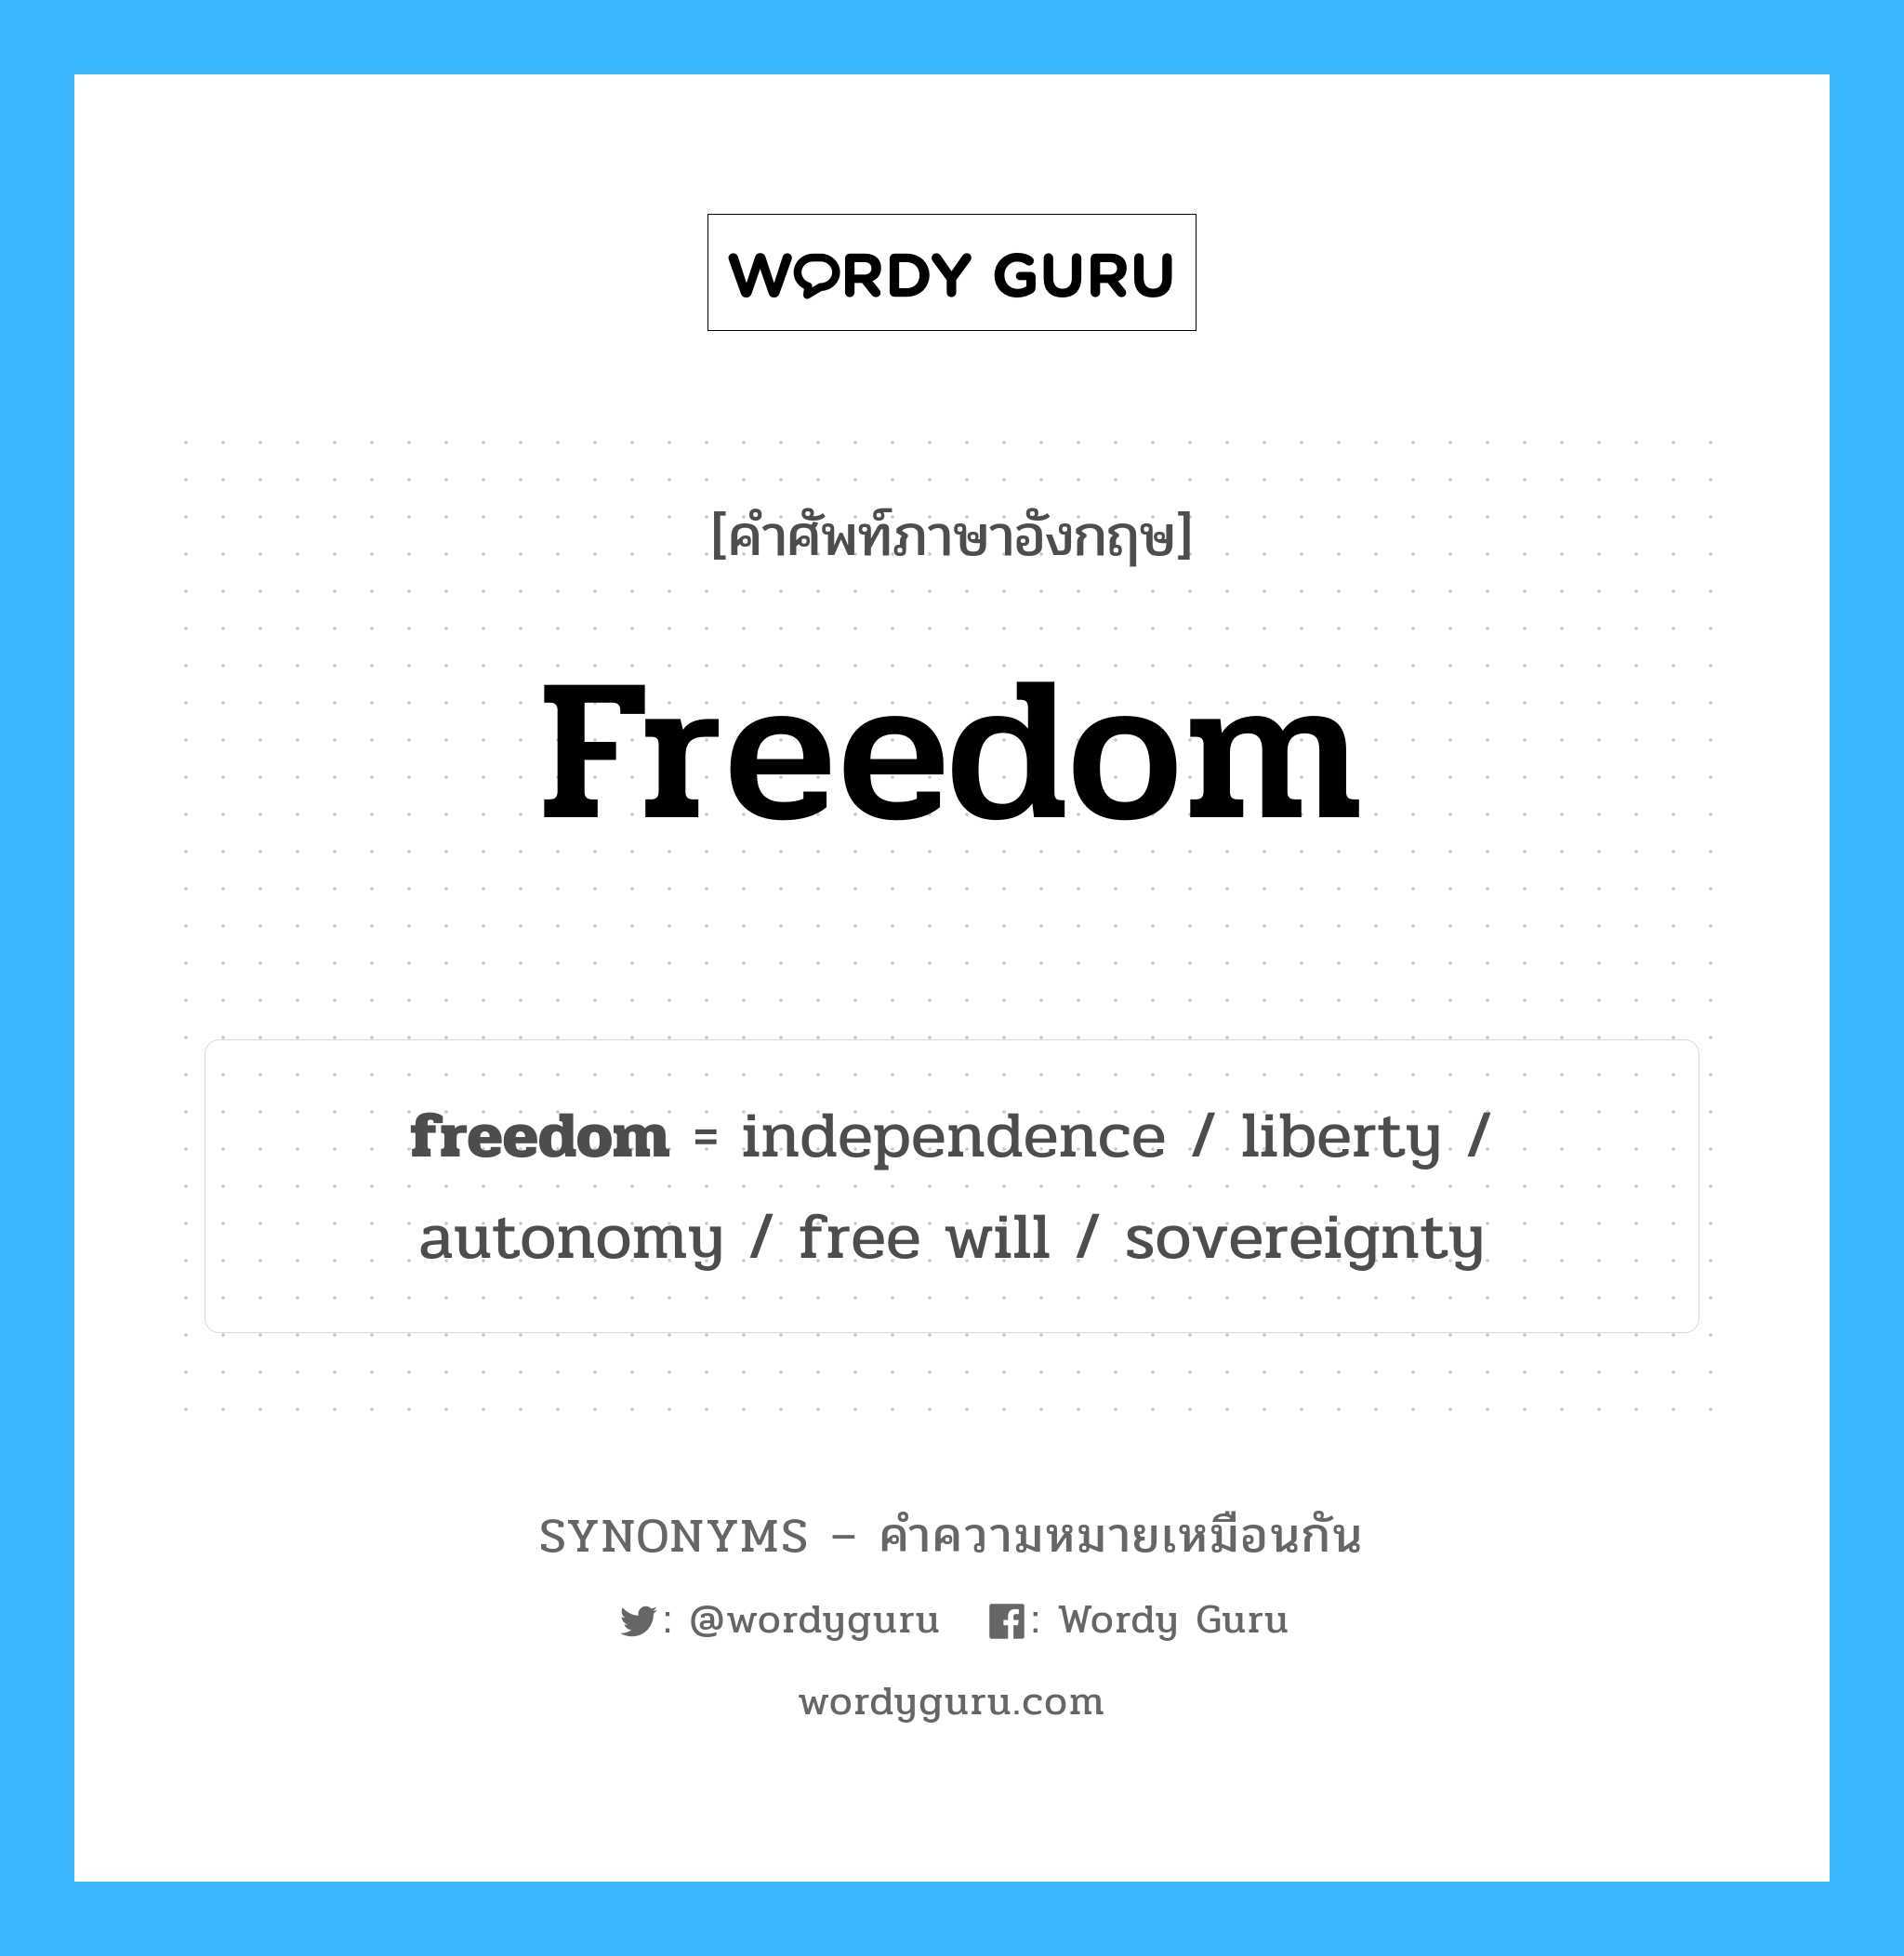 autonomy เป็นหนึ่งใน freedom และมีคำอื่น ๆ อีกดังนี้, คำศัพท์ภาษาอังกฤษ autonomy ความหมายคล้ายกันกับ freedom แปลว่า อิสระ หมวด freedom